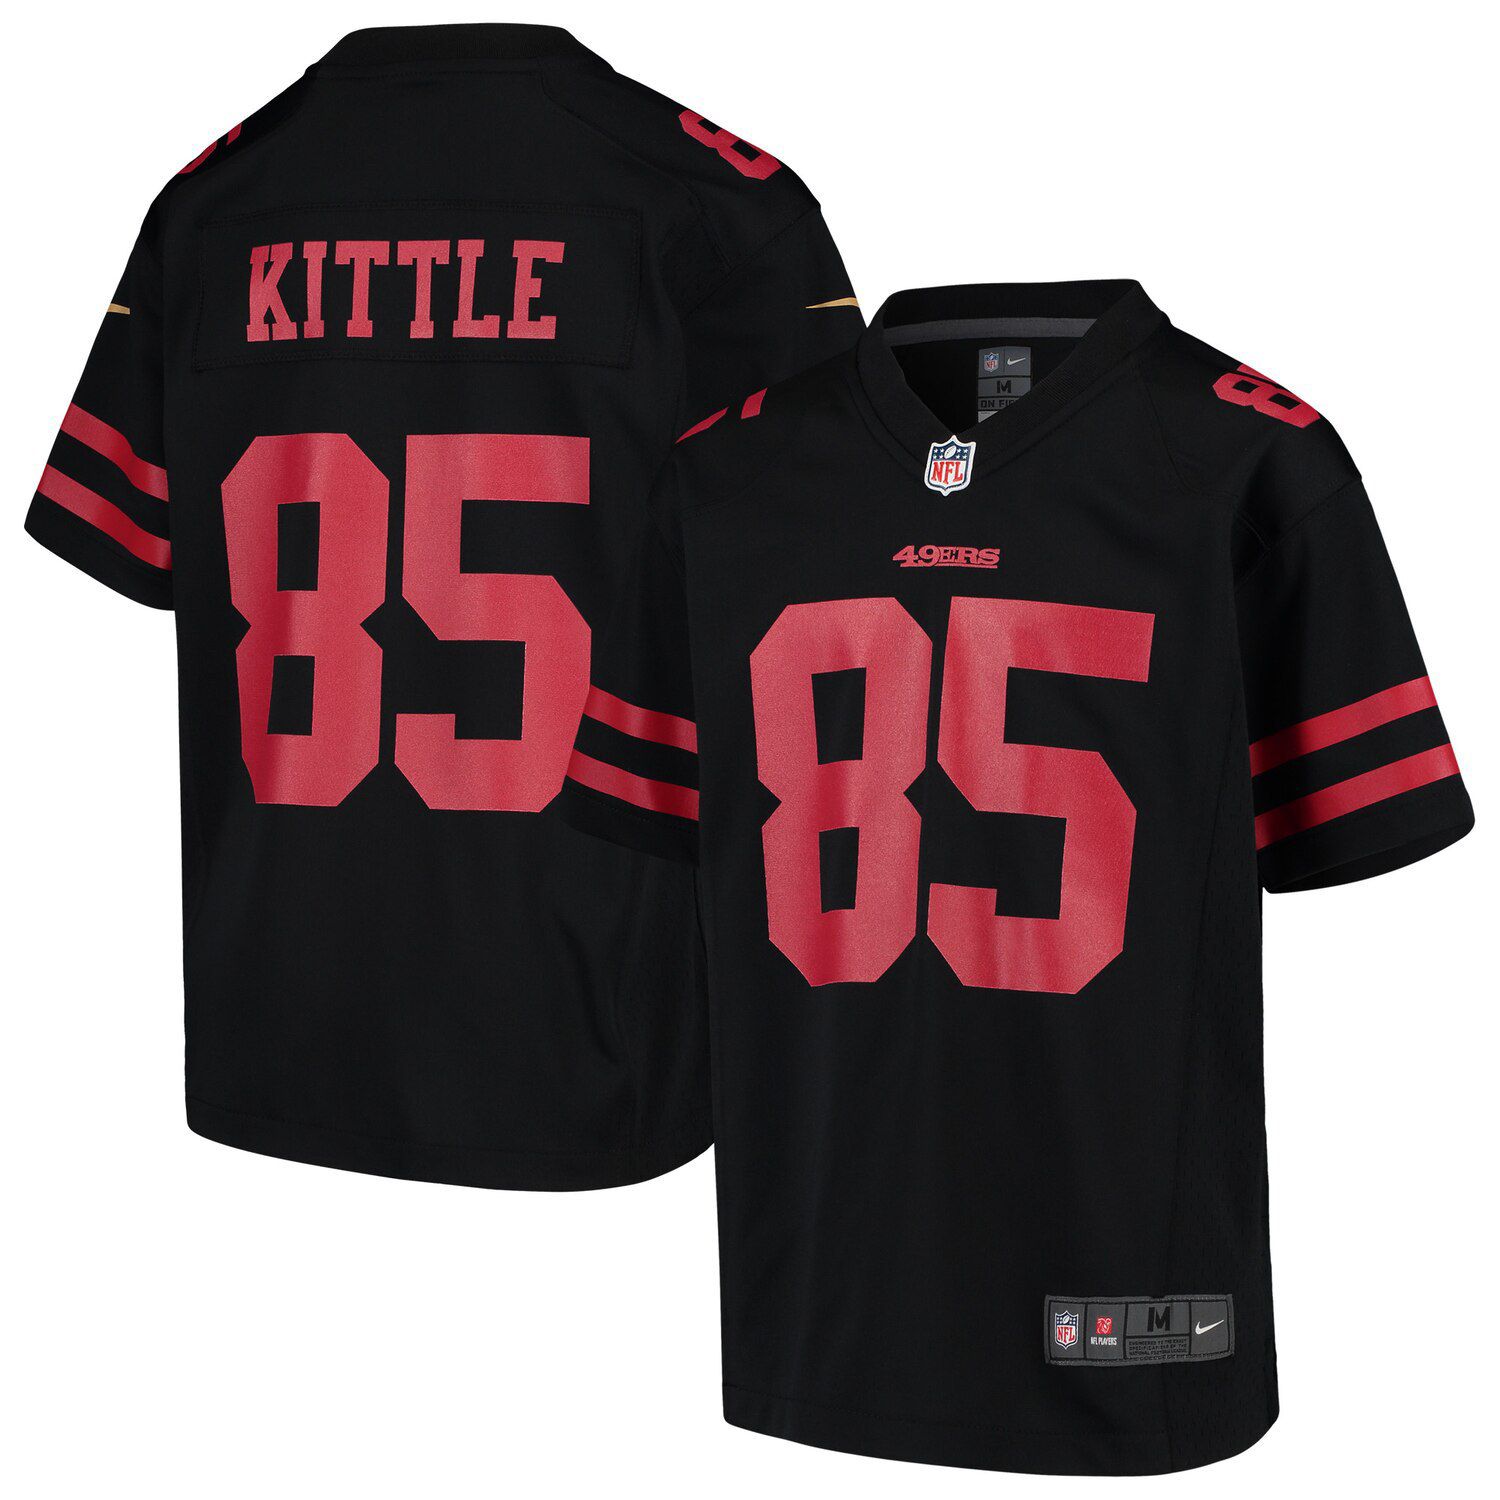 49ers black kittle jersey